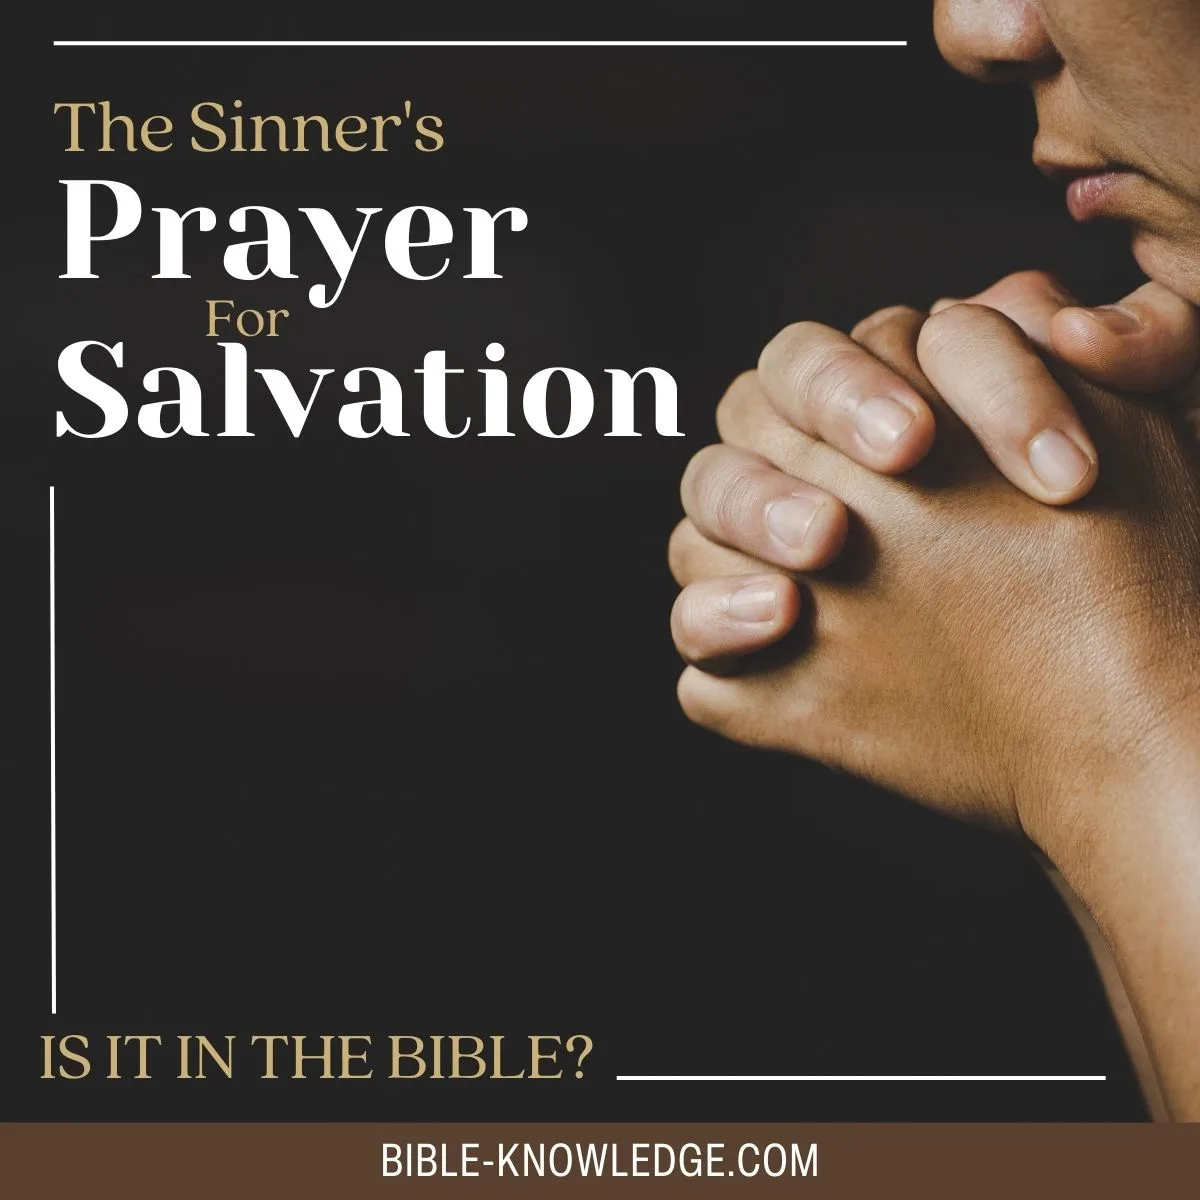 The Sinner’s Prayer For Salvation